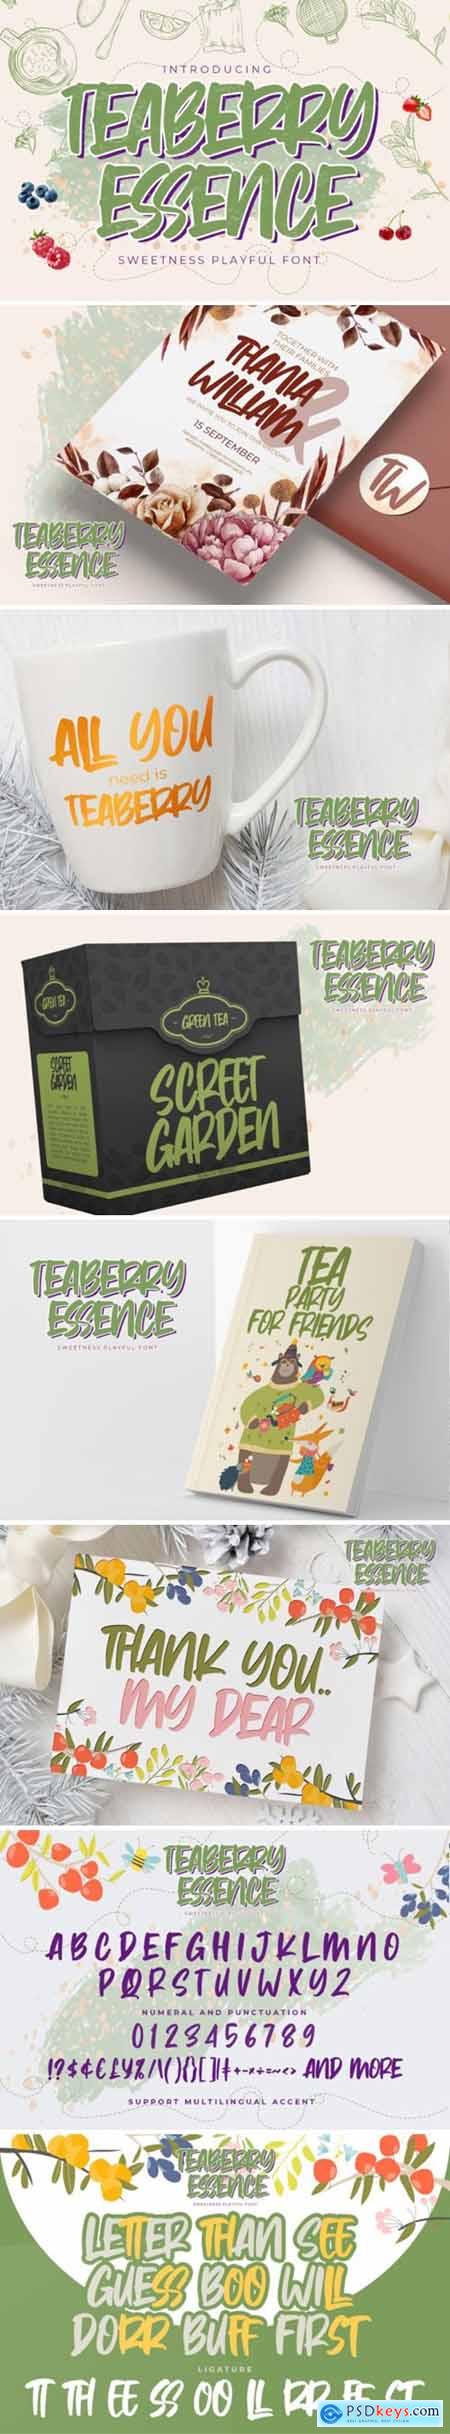 Teaberry Essence Font